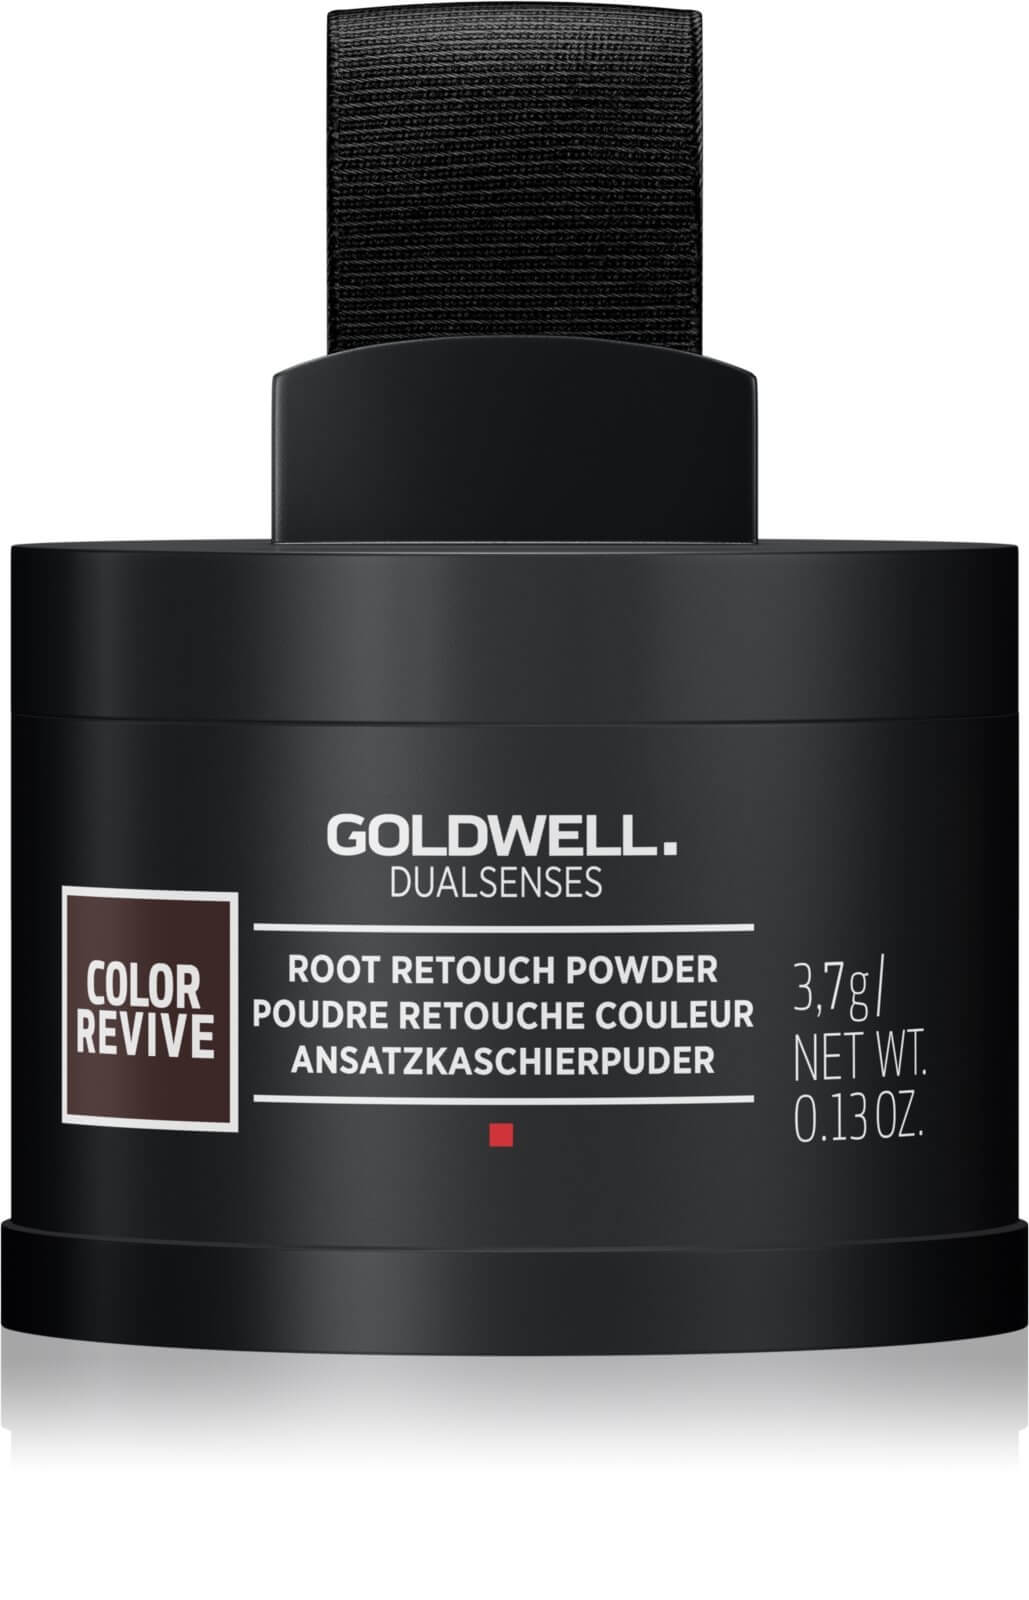 Goldwell Pudr pro zakrytí odrostů Dualsenses Color Revive (Root Retouche Powder) 3,7 g Dark Brown